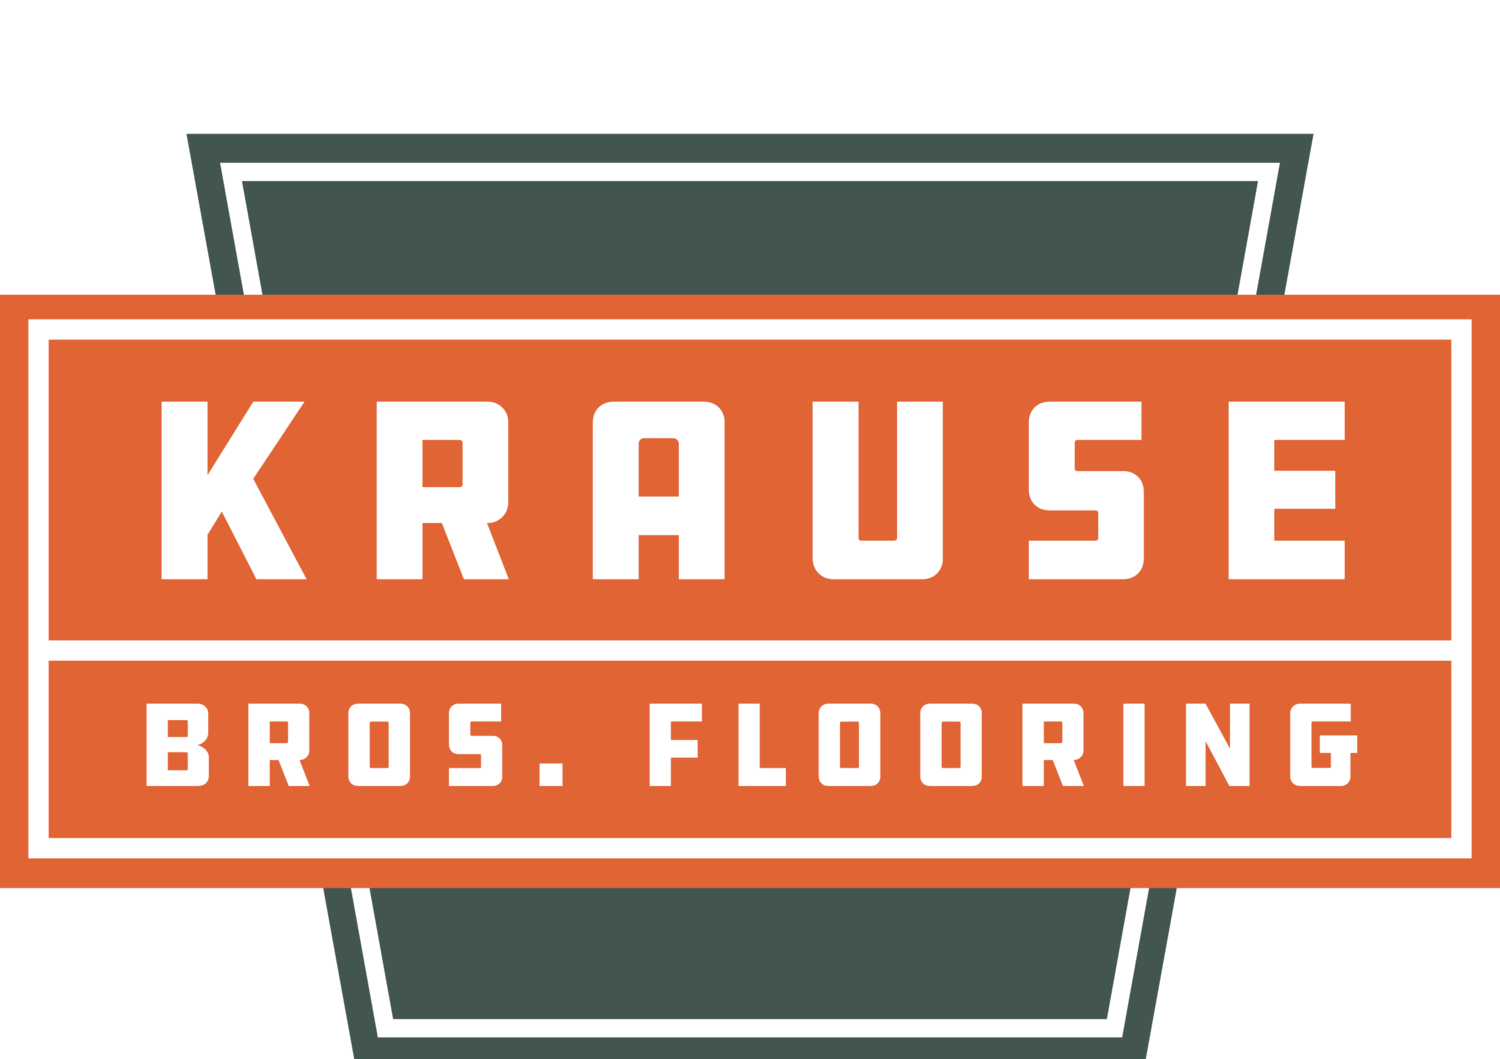 Krause Brothers Flooring